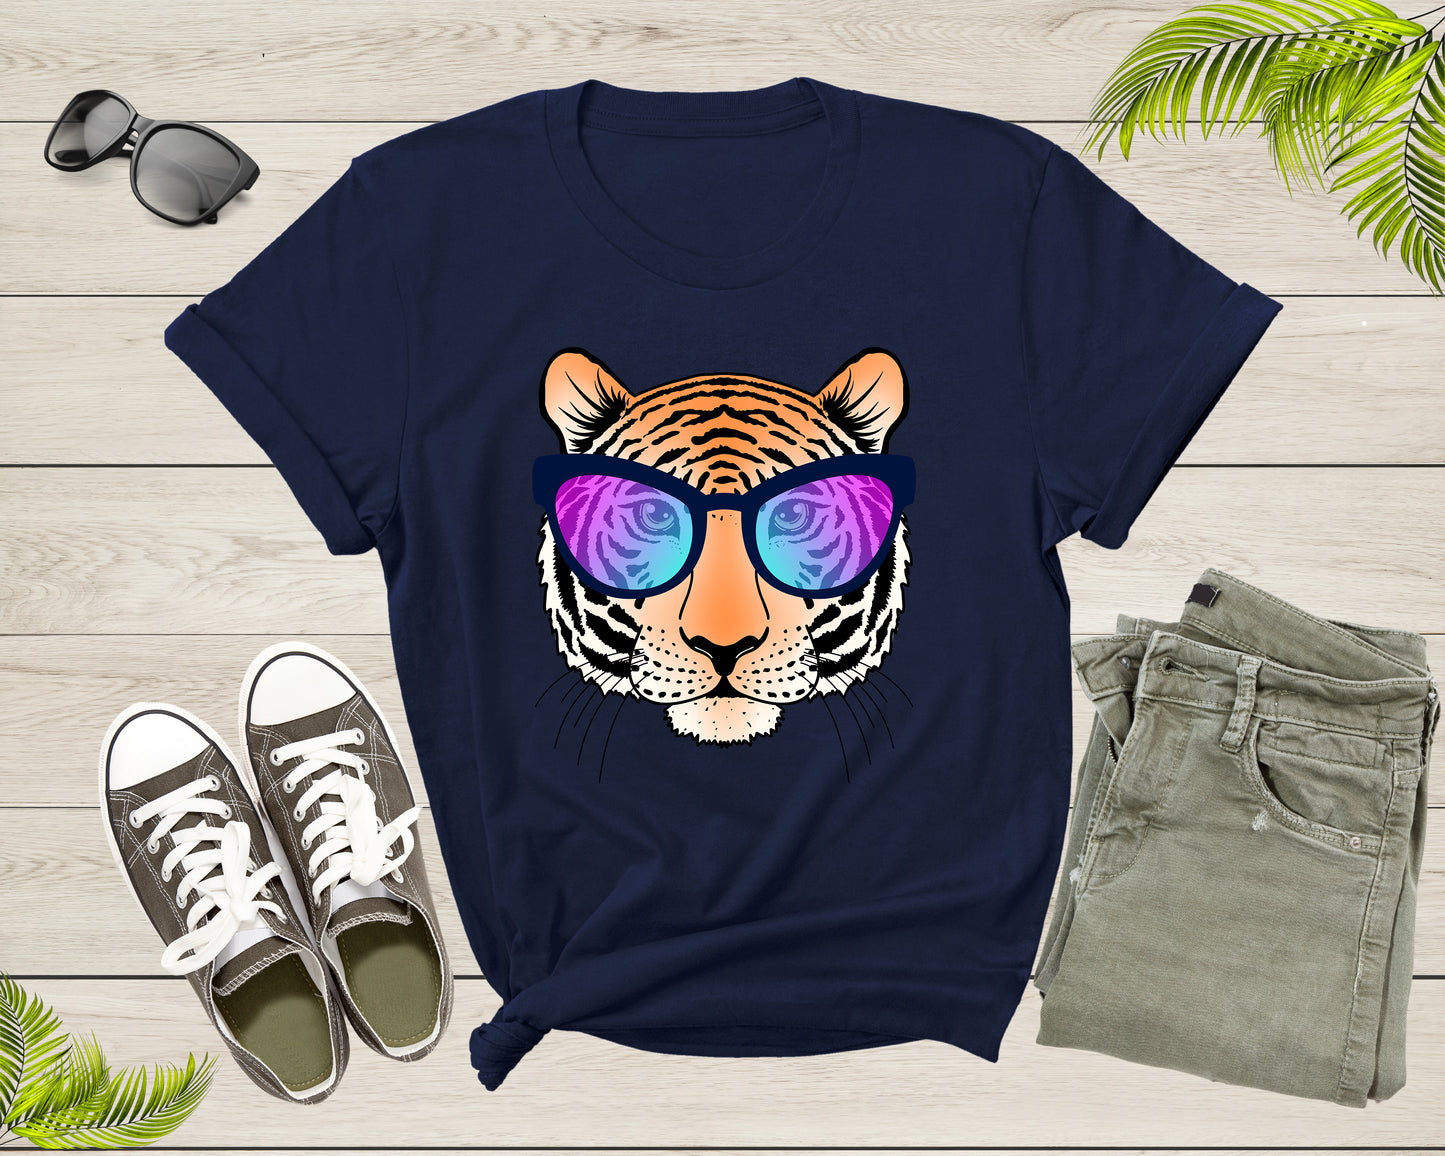 Tiger Shirt Animal Shirt Tiger Gifts Tiger Tshirts Animal Lover Shirt Wildlife Animal Tshirt Tiger Gift Animal Lover Tiger Shirt